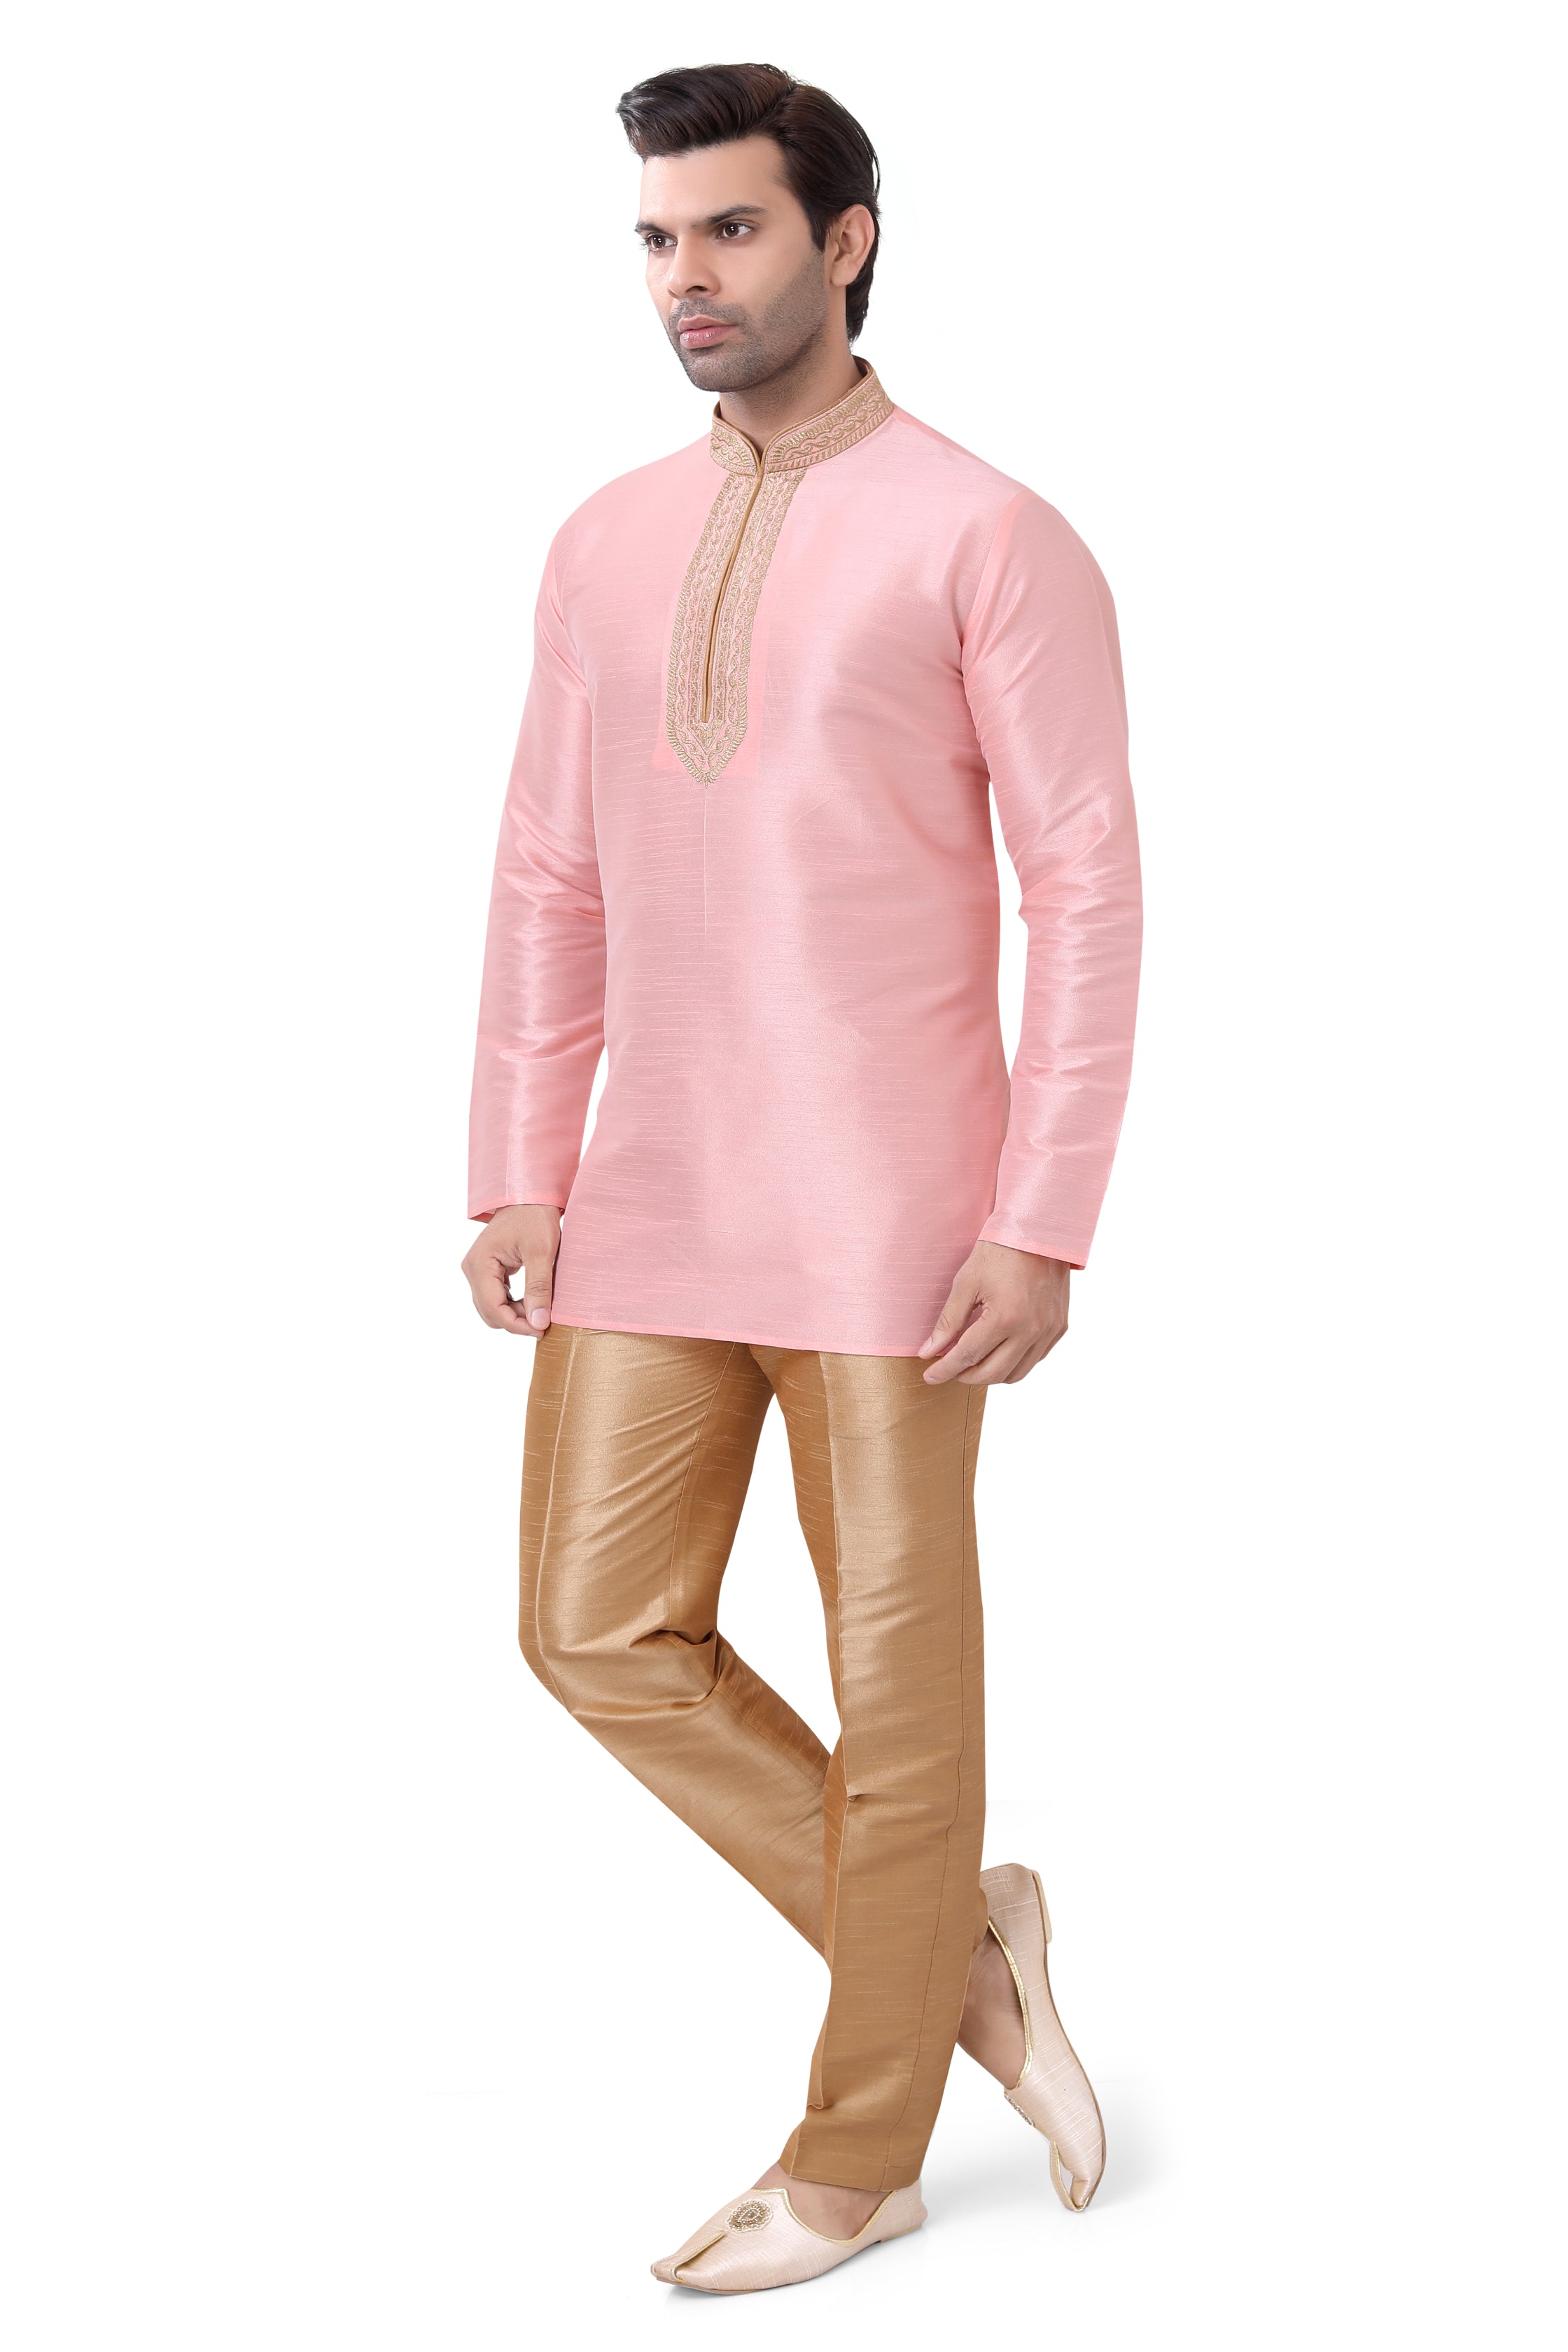 Banarasi Dupion Silk Short Kurta with embroidery in Light Pink color